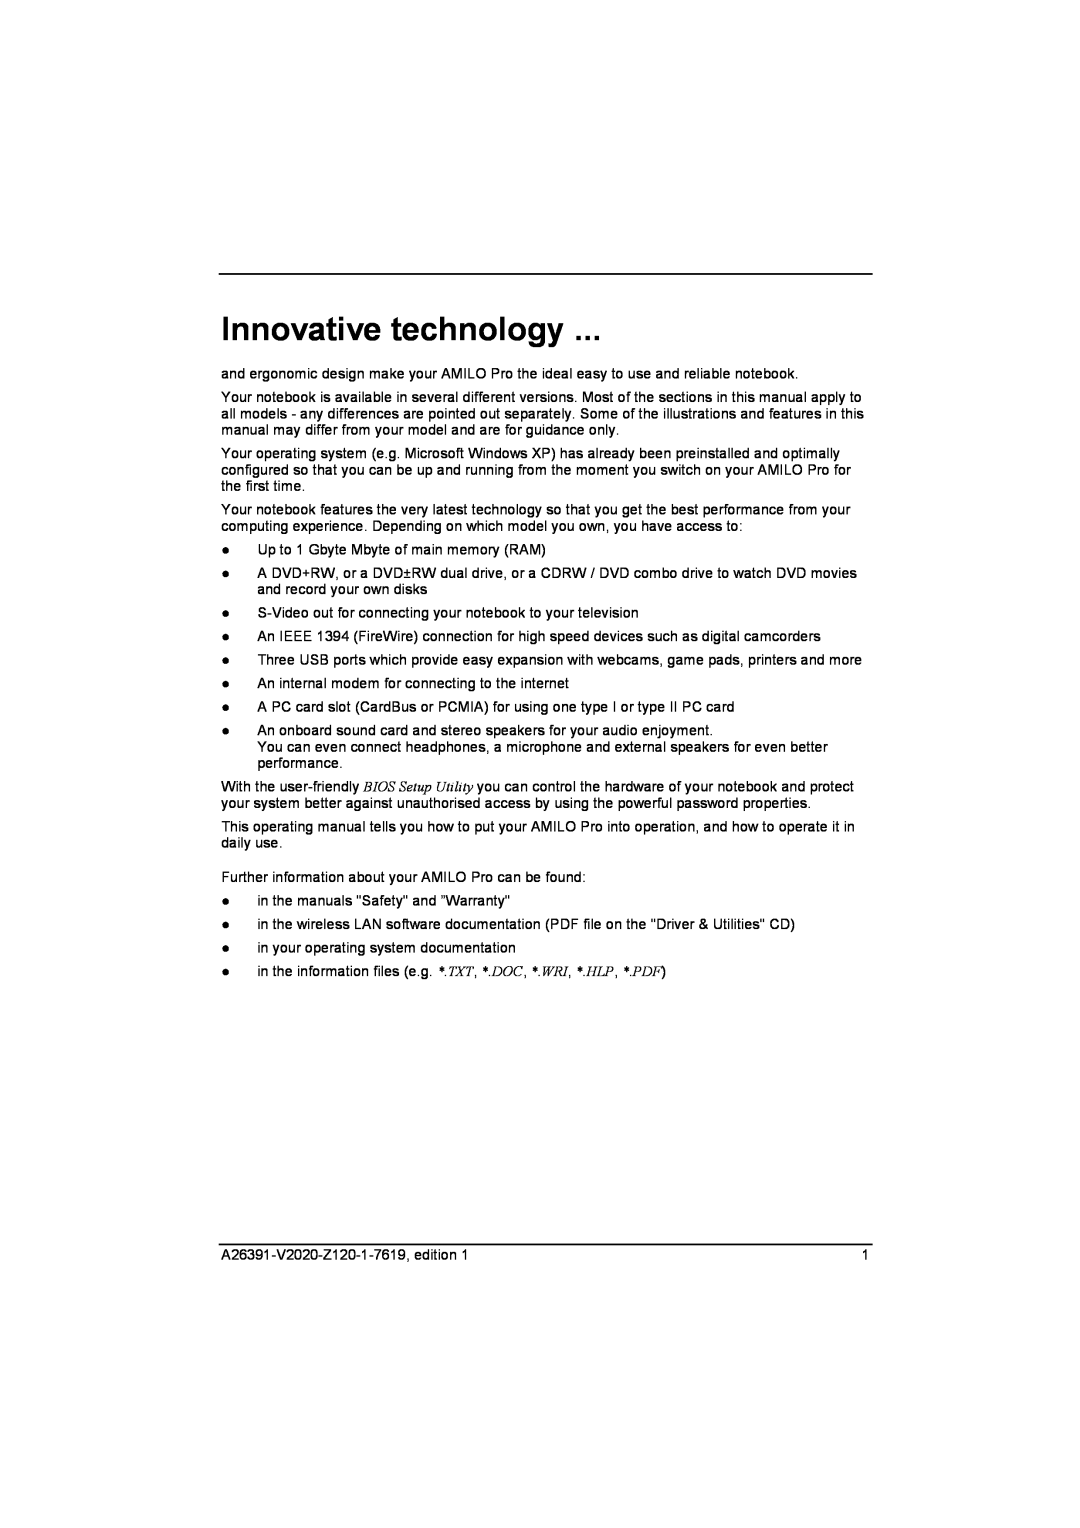 Fujitsu Siemens Computers V2020 manual Innovative technology 